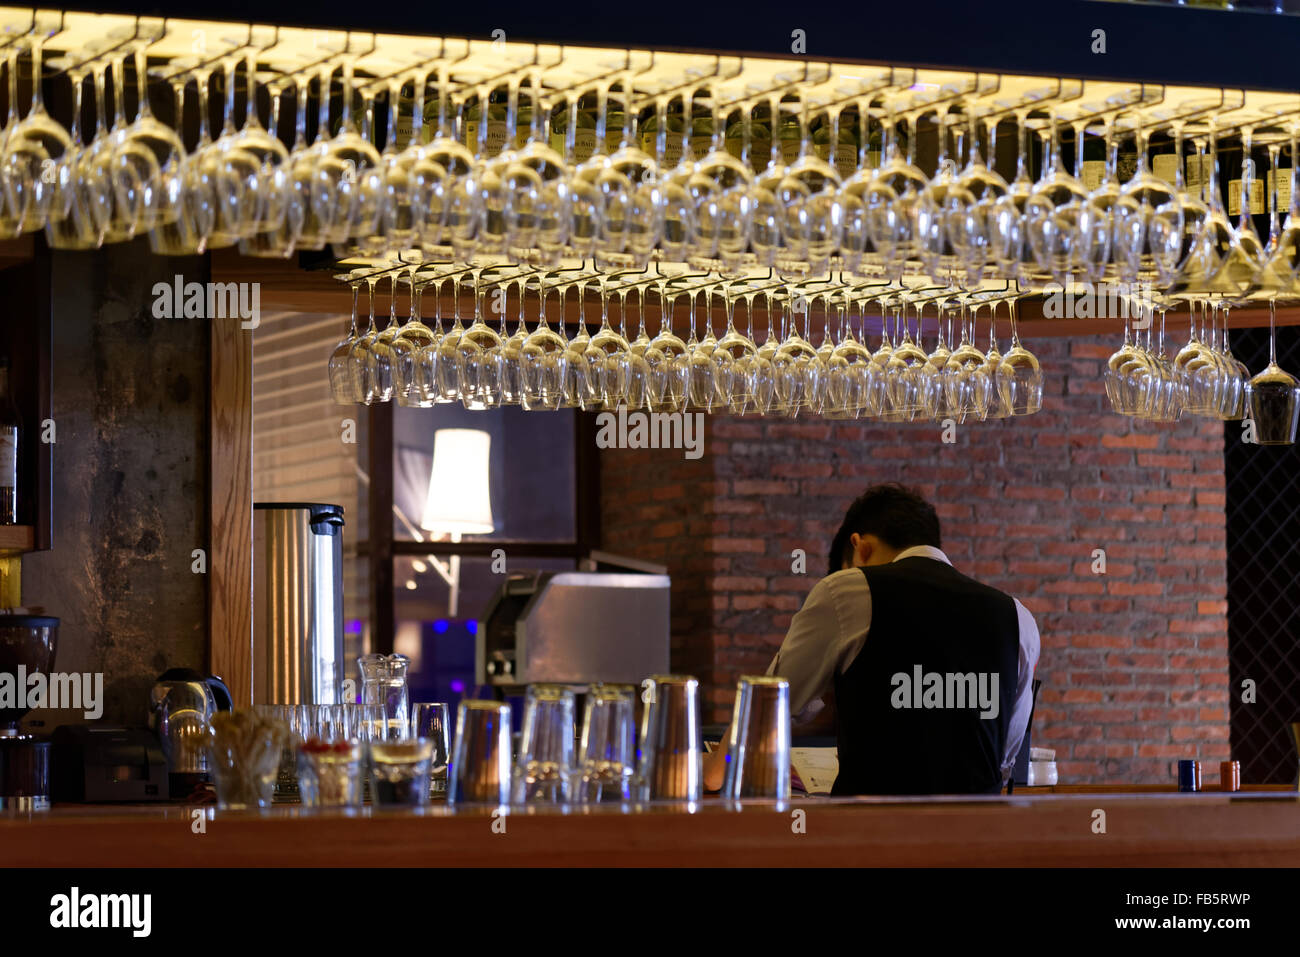 Gruppo di vuoto bicchieri da vino appesi da travi metalliche in un bar Foto  stock - Alamy